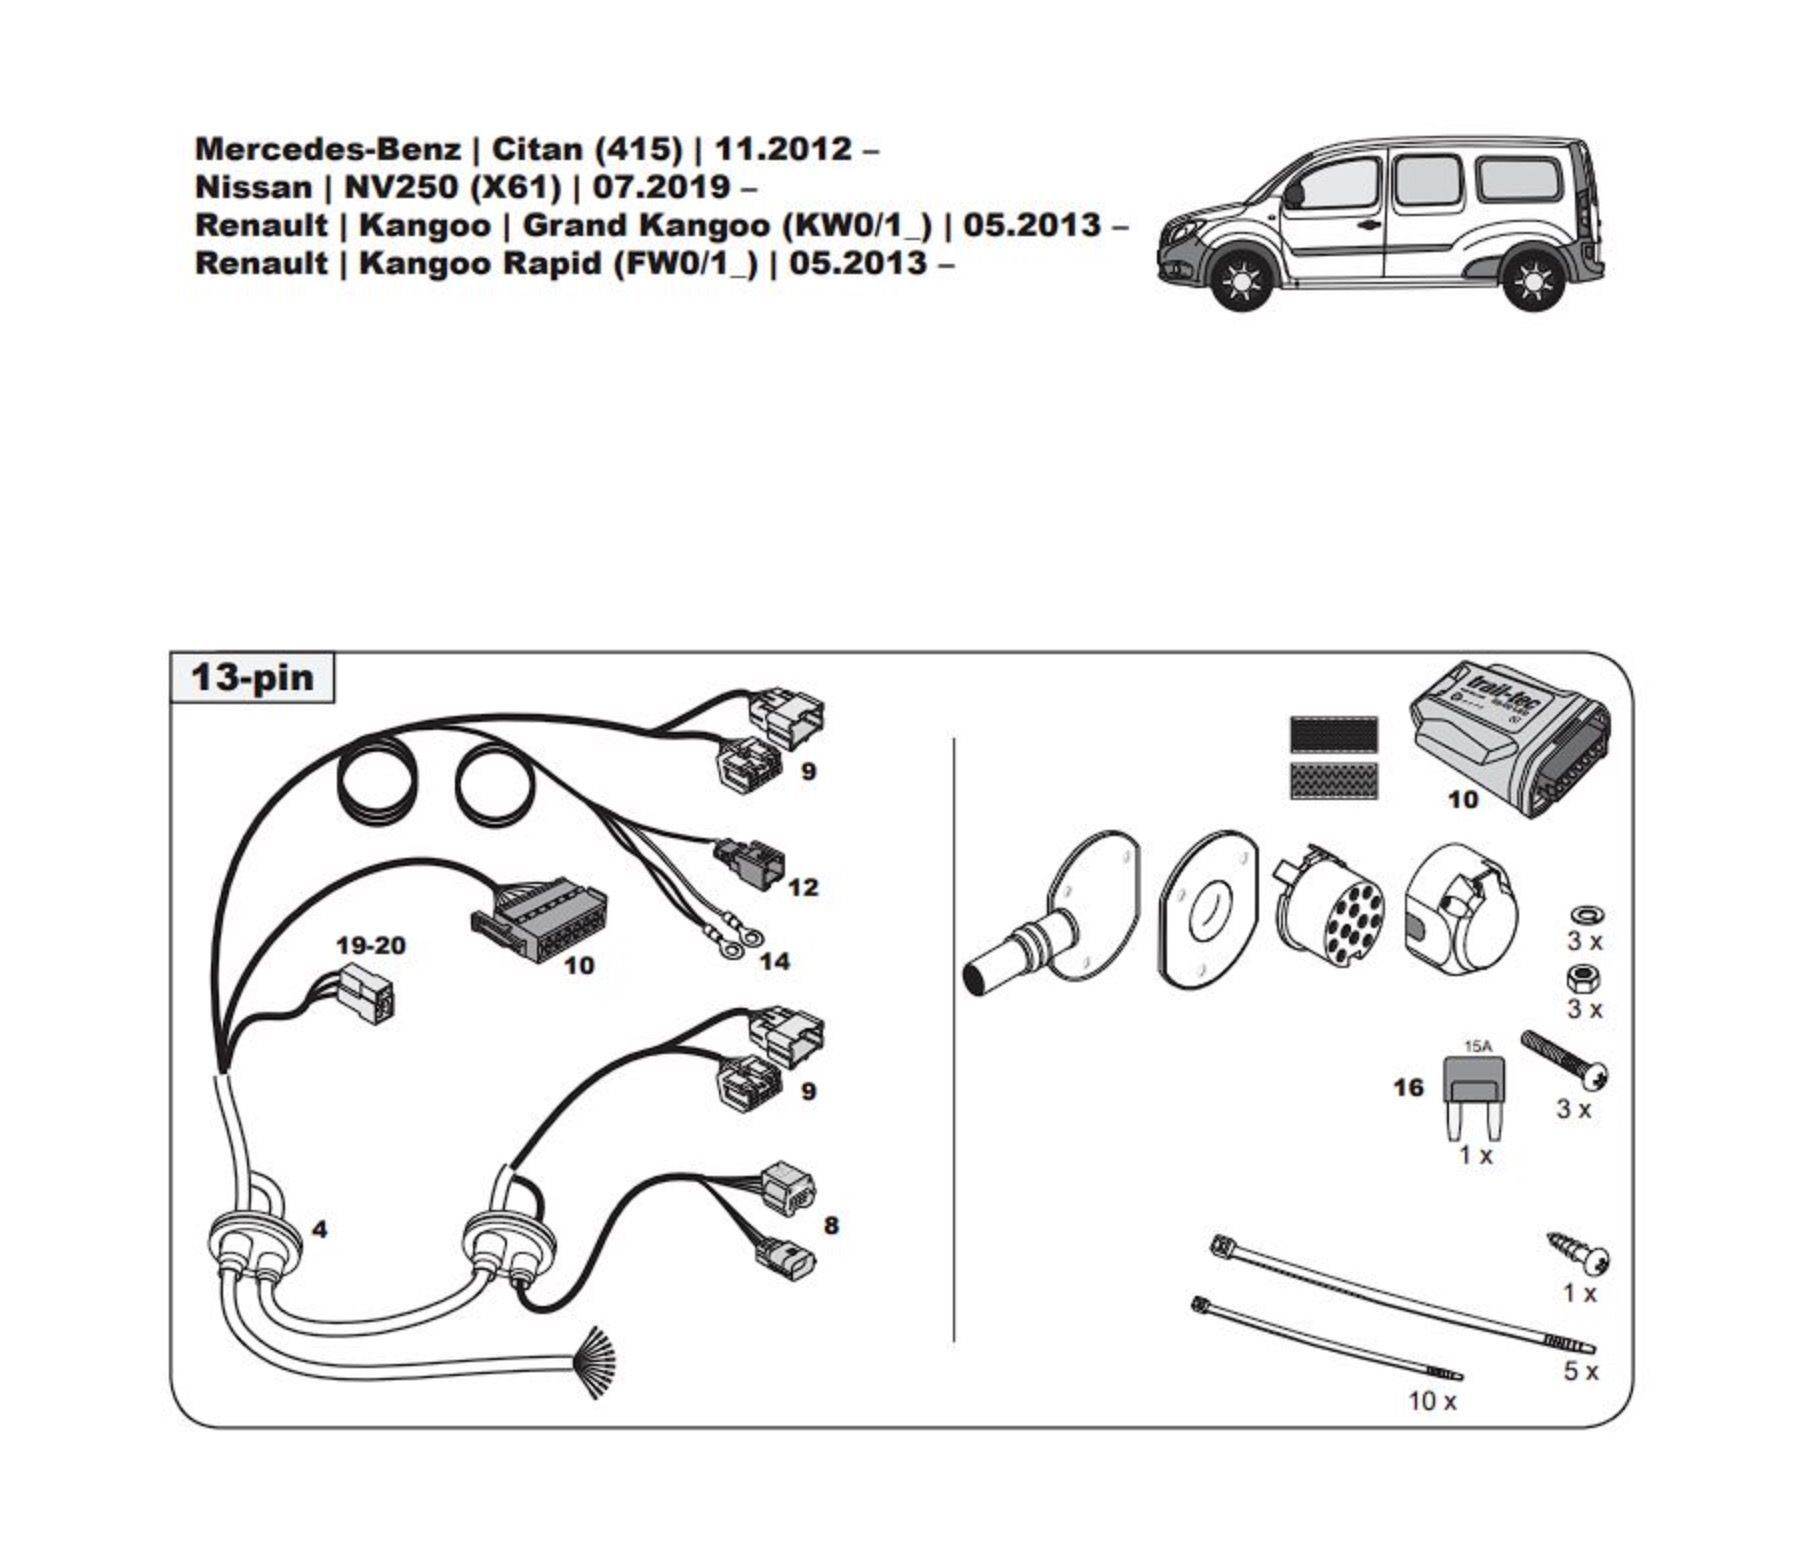 Штатная электрика для фаркопа с розеткой 13-pin, для Renault Kangoo WYR322613R (Trail-Tec)